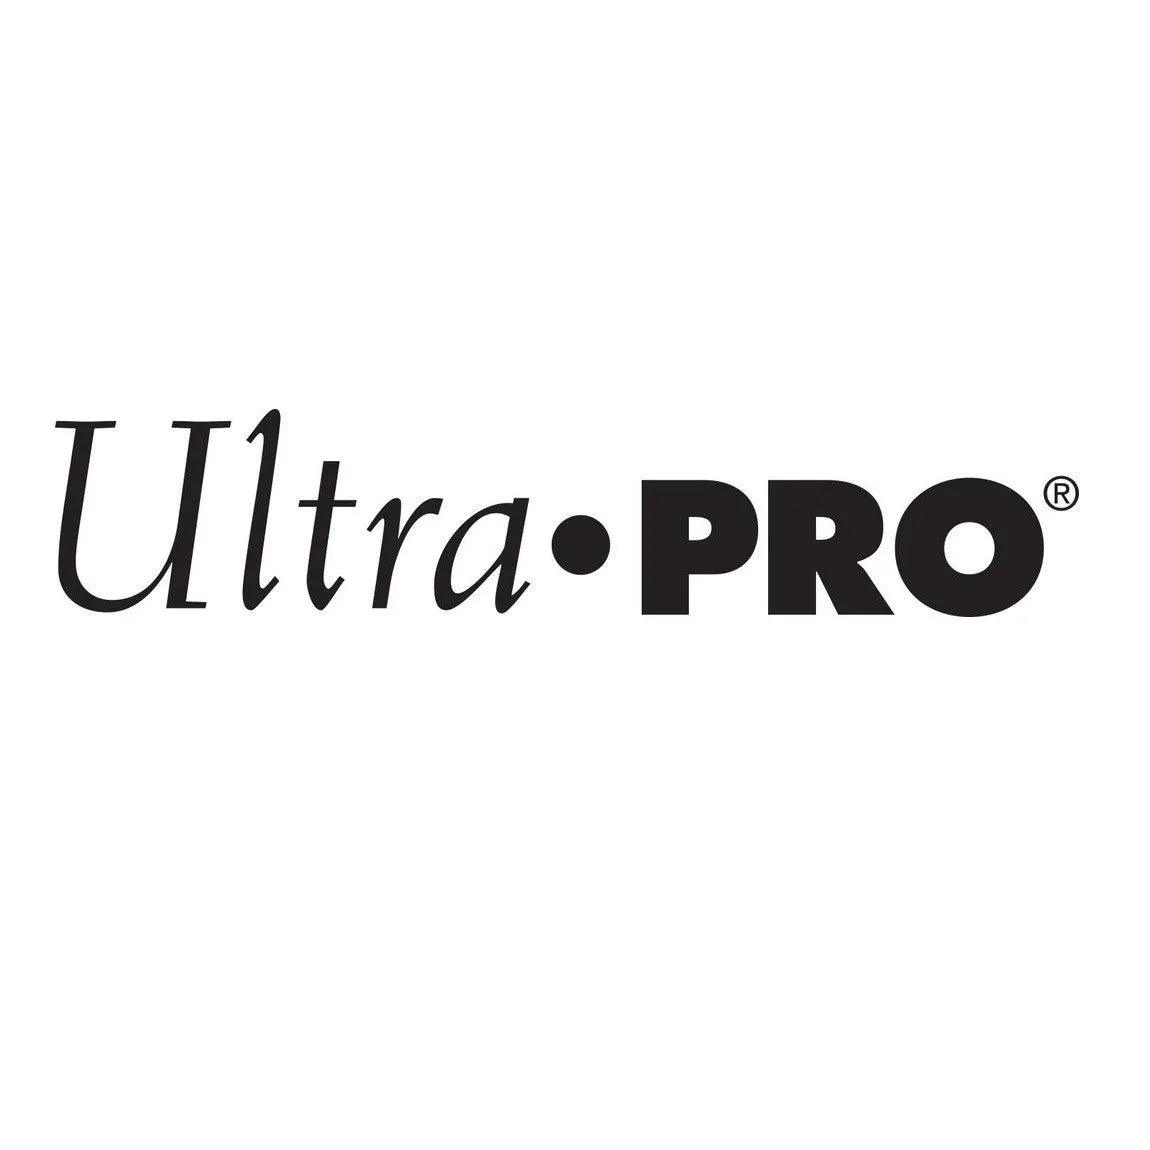 Ultra PRO - Card Sleeves (100ct) - Platinum Series - Soft Standard Size (2.5" x 3.5") - Hobby Champion Inc